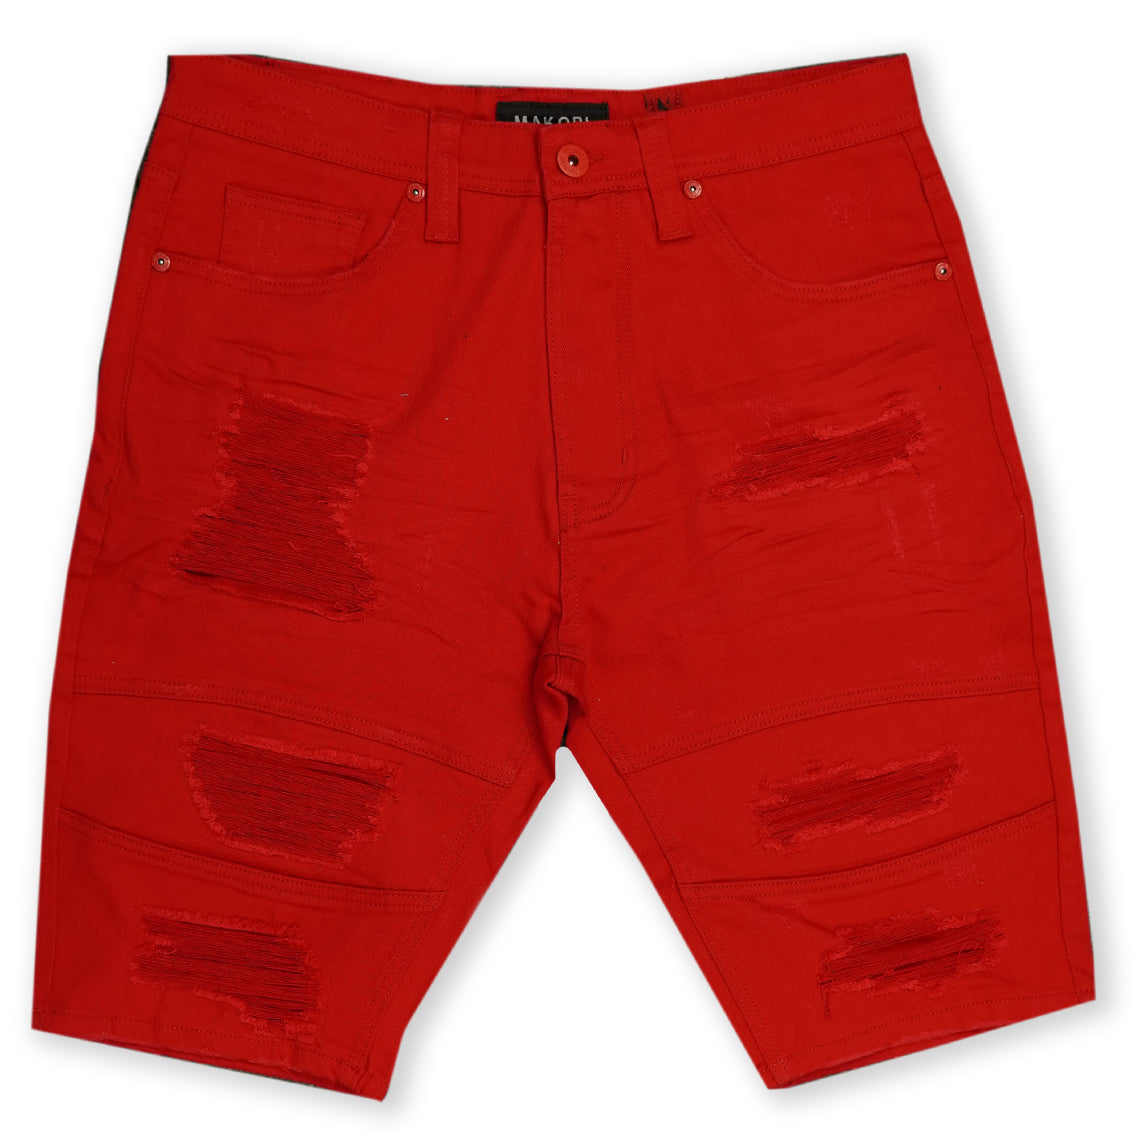 M760 Avlaki Shredded Twill Shorts - Red